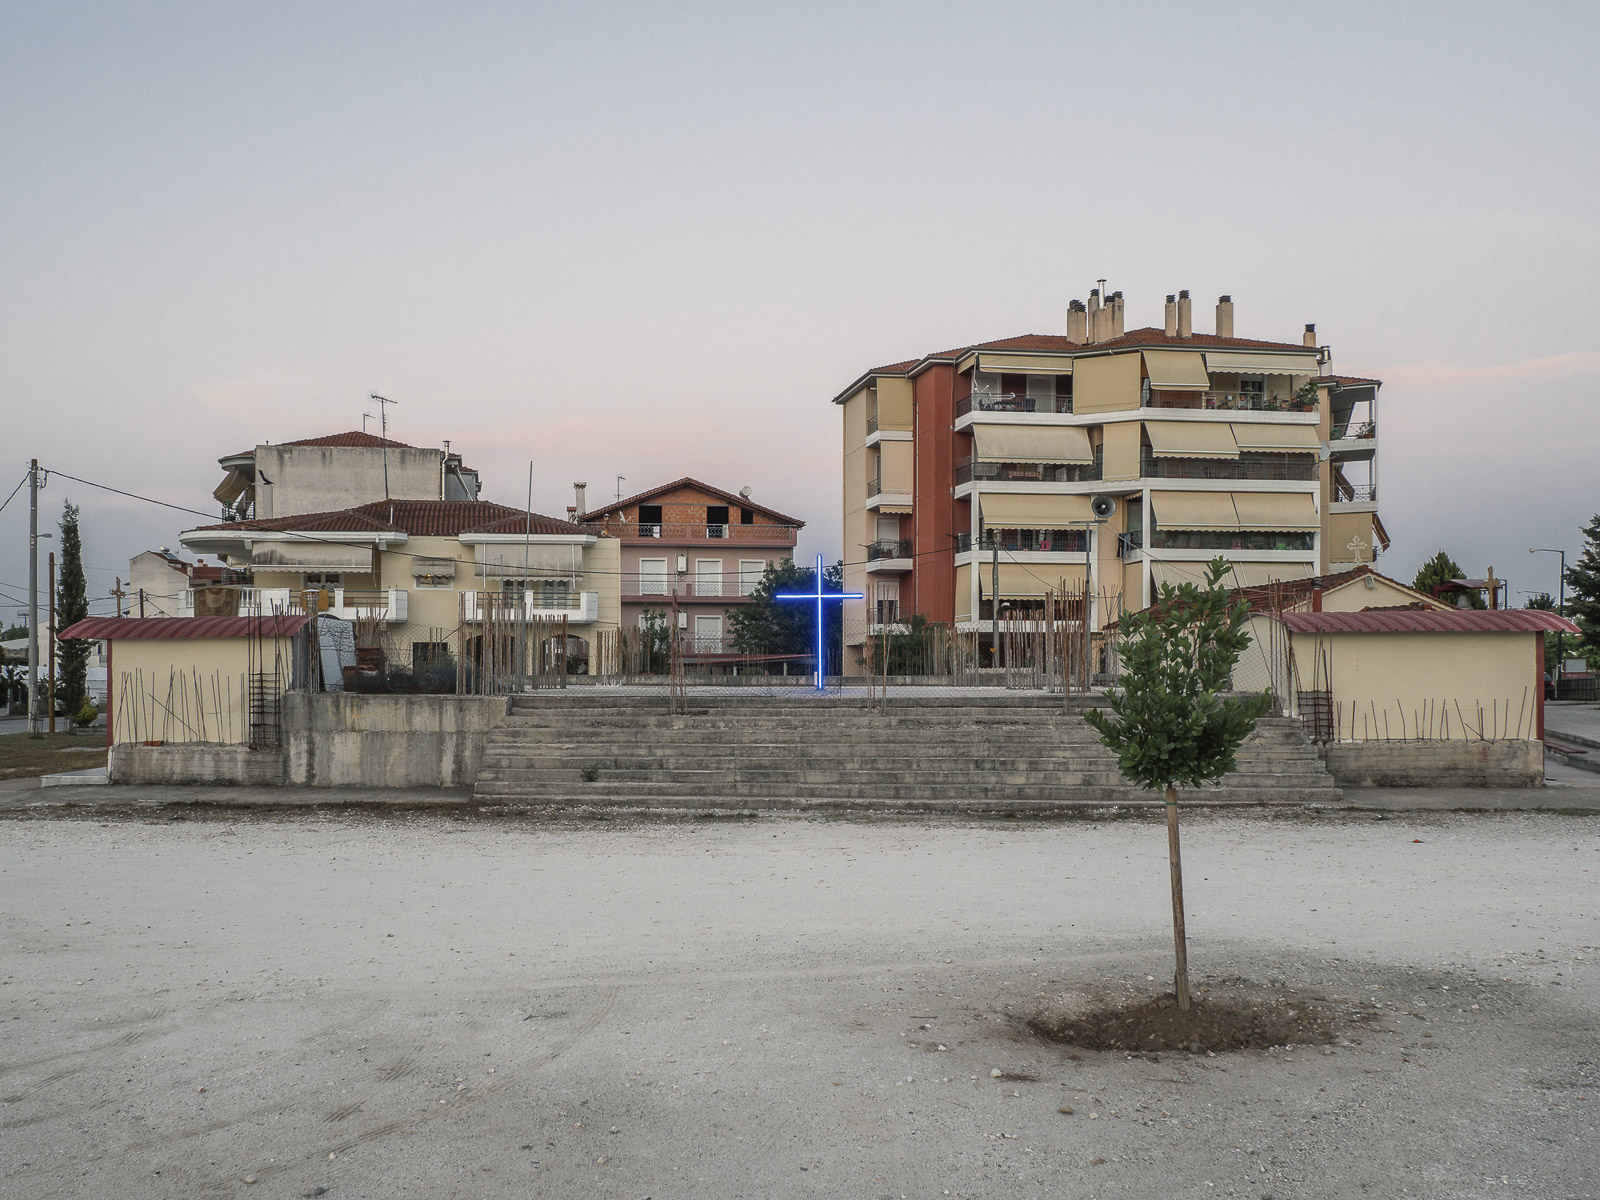 THE PROVINCES - Urban Pulp by Vasilis Ntaopoulos